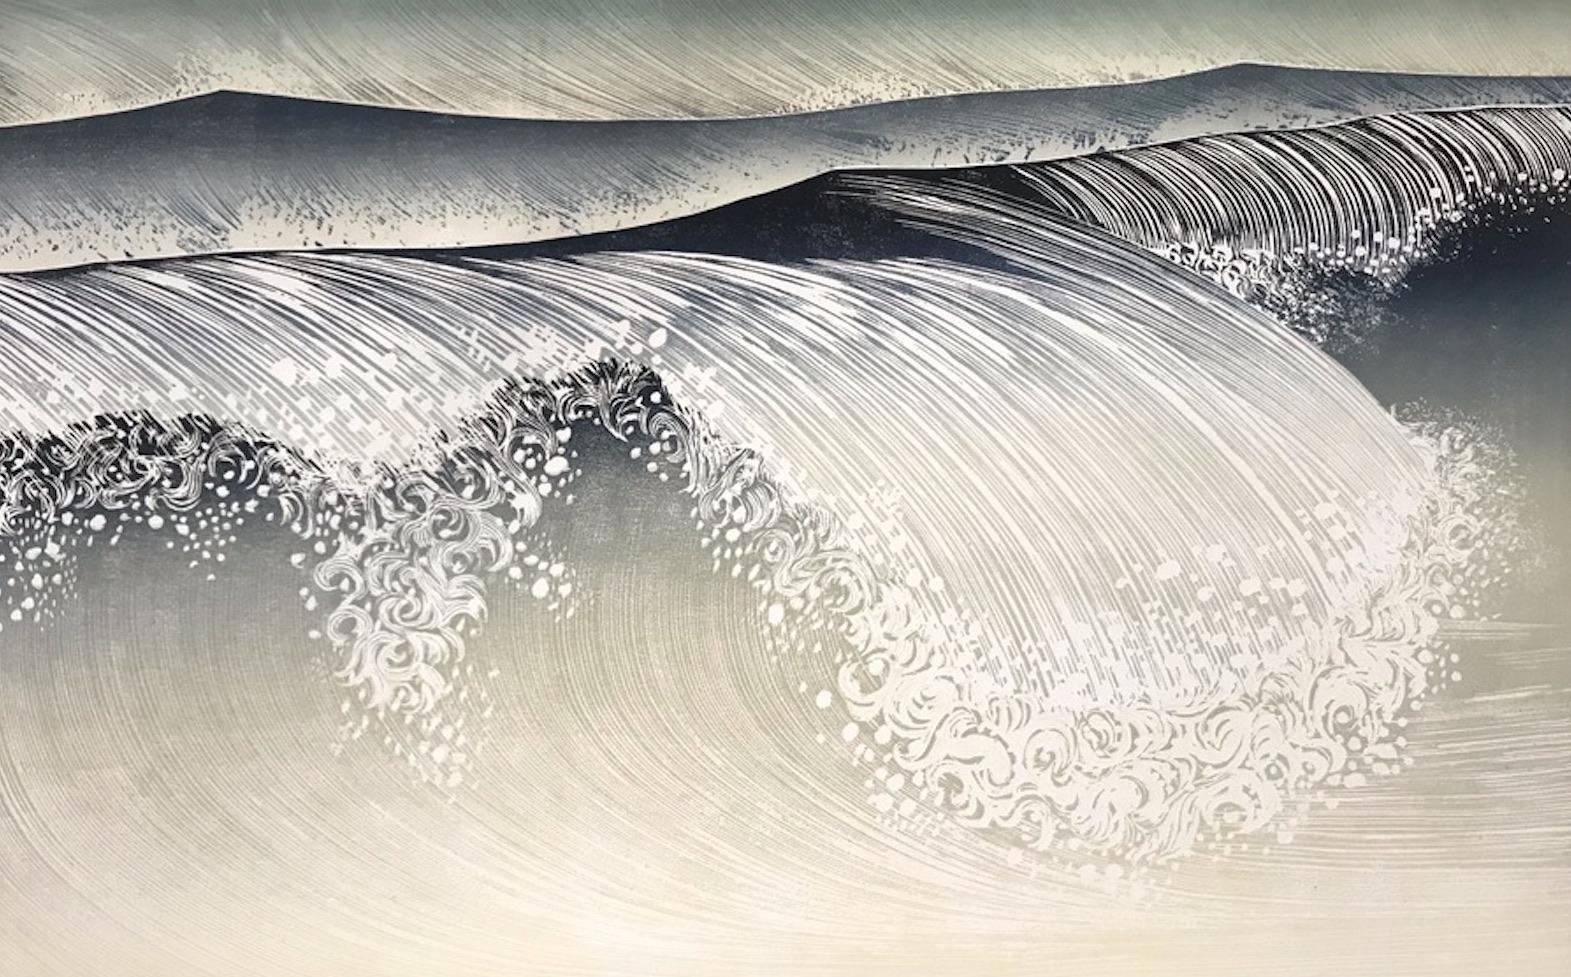 Shorebreak-Holzschnitt im japanischen Stil, zeitgenössischer handgefertigter Meereslandschaftsdruck,